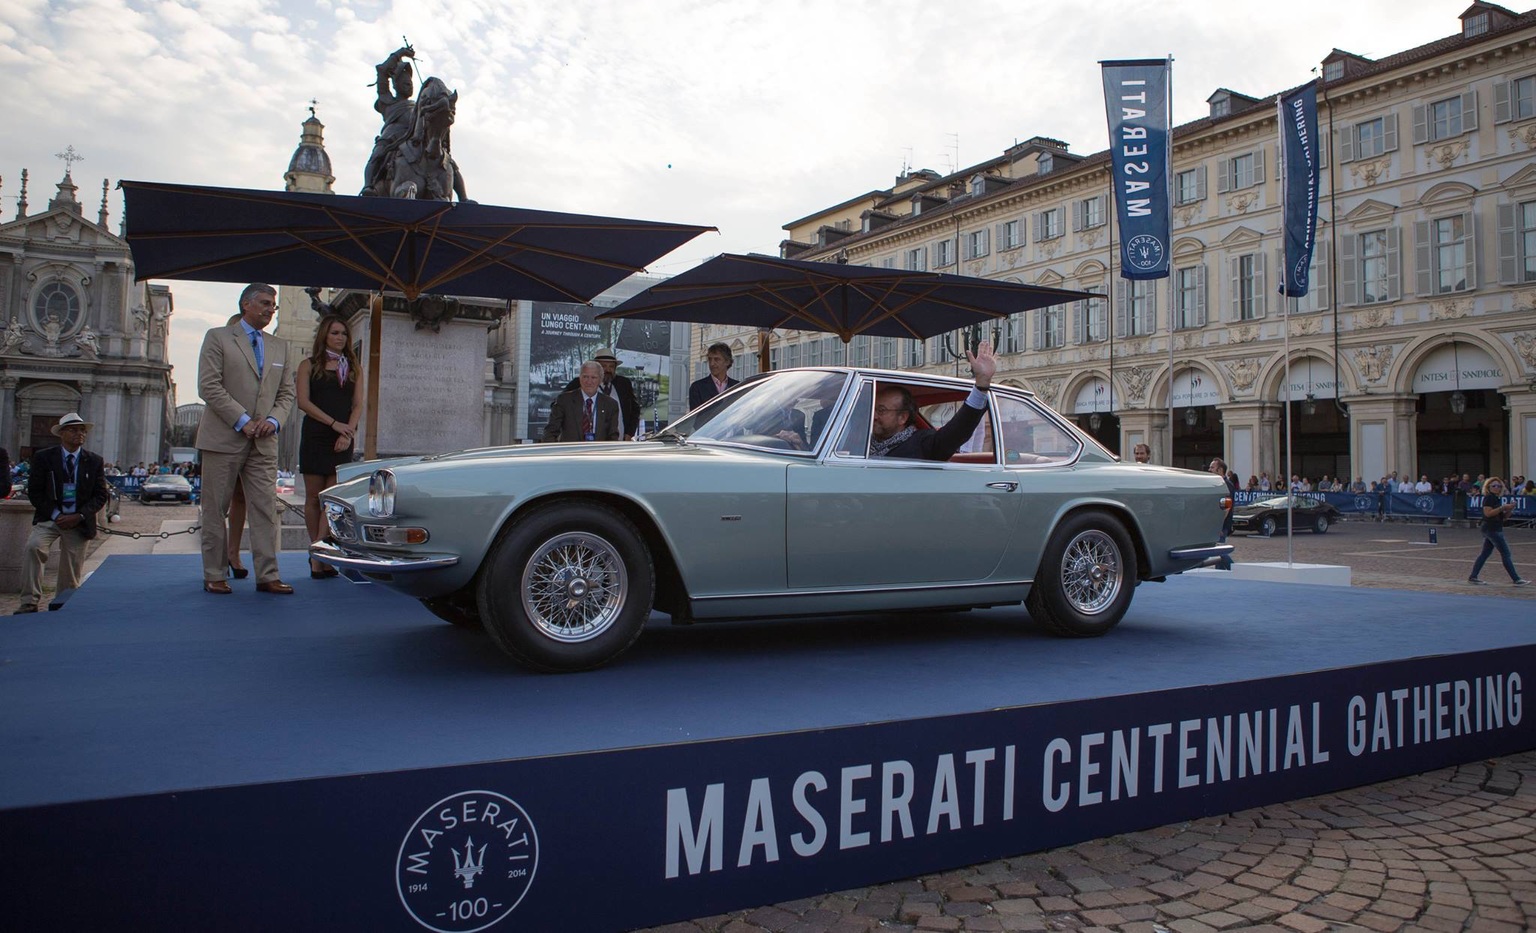 Maserati Centennial International Gathering